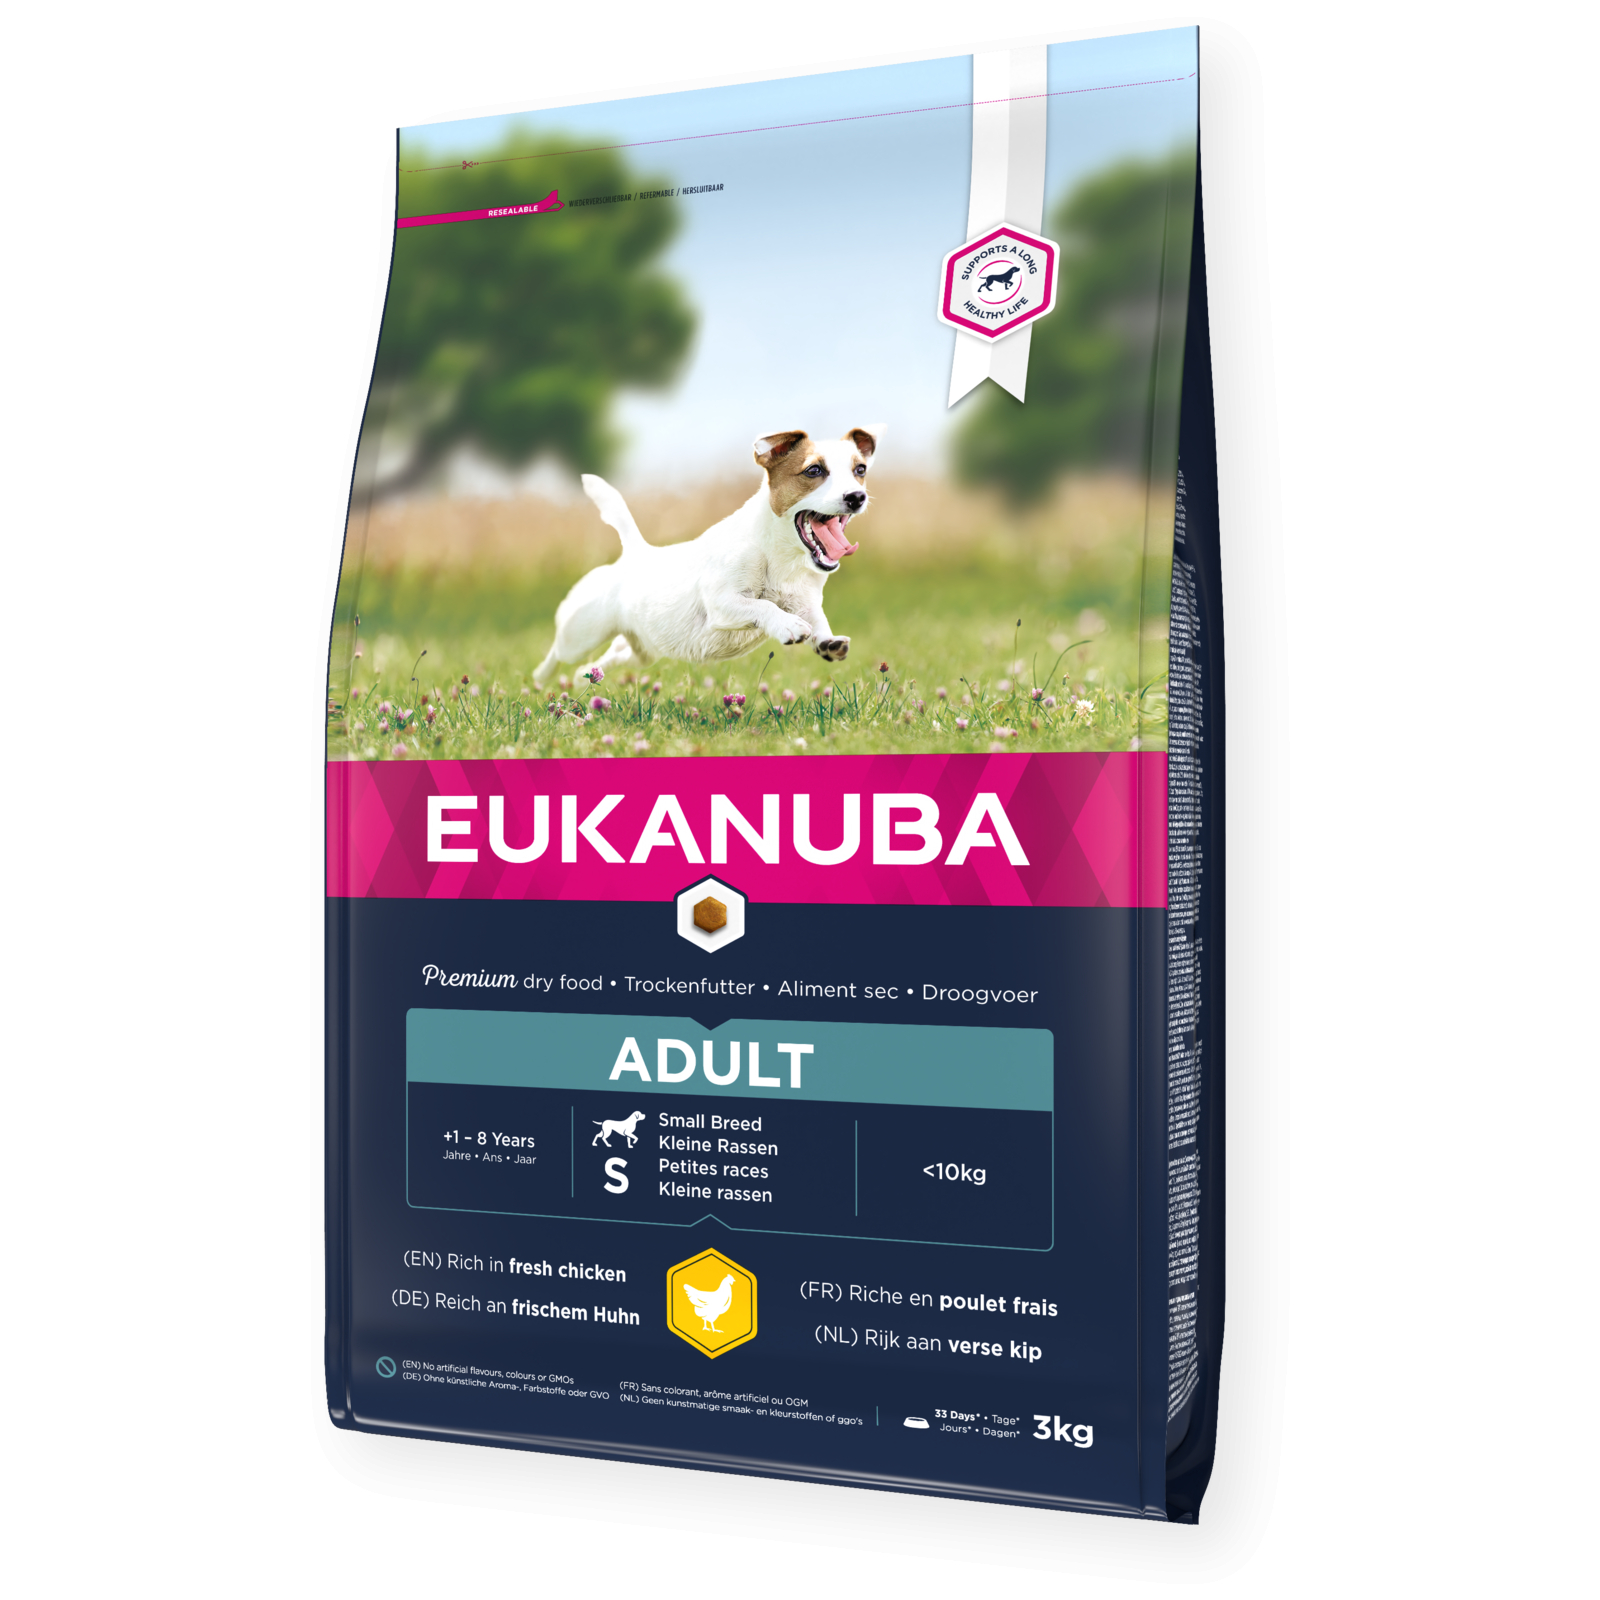 Eukanuba Active Adult Small Breed pour chien de petite taille